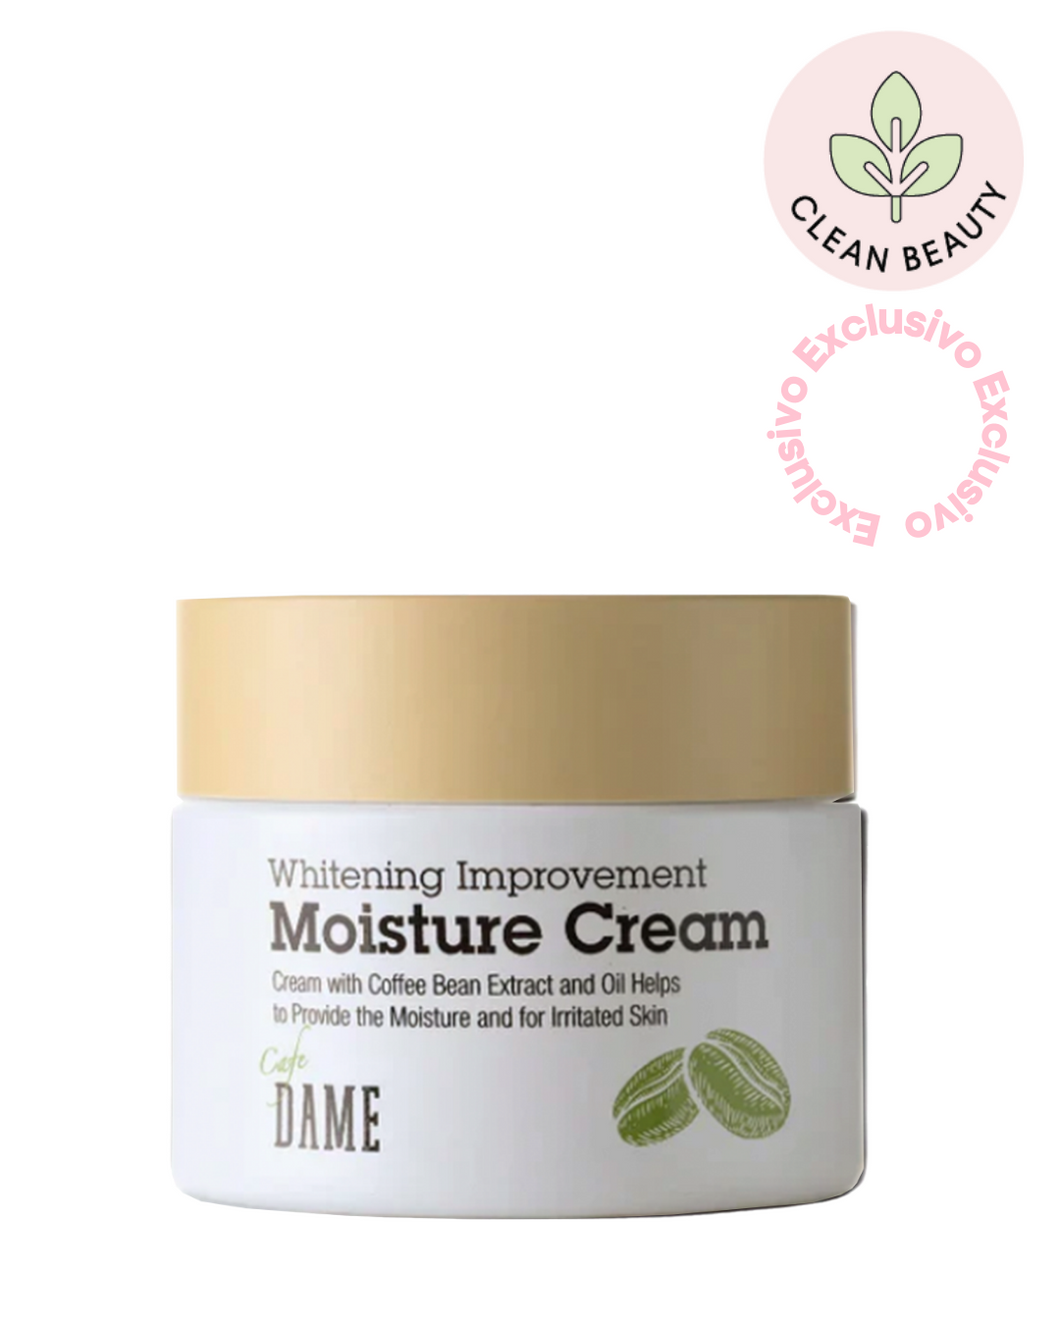 CafeDame - Whitening Improvement Moisture Cream